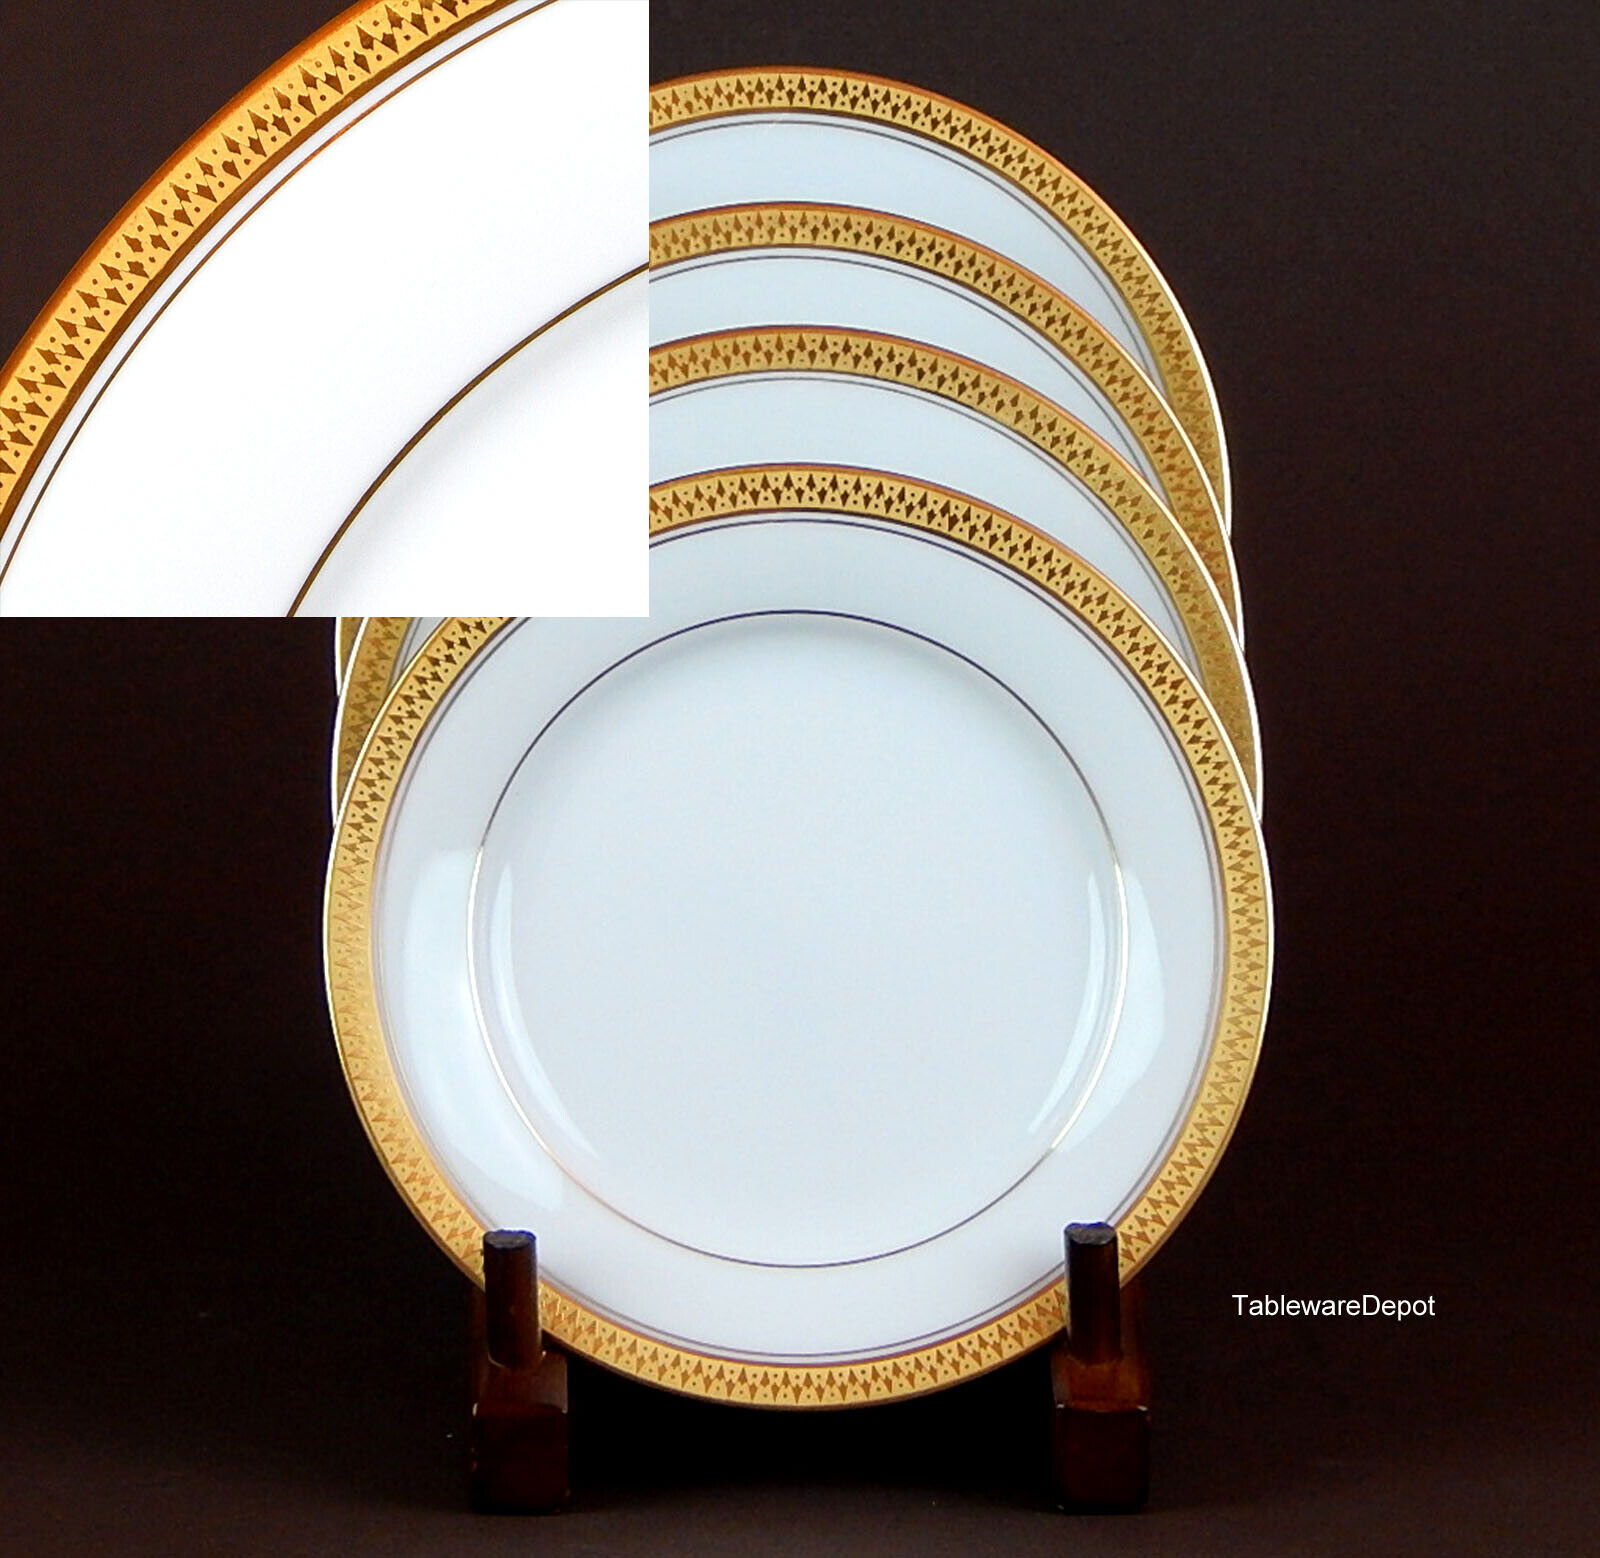 NORITAKE 5480: Set of 4 Bread Plates, MINT UNUSED Condition! Gold & White Noritake 5480